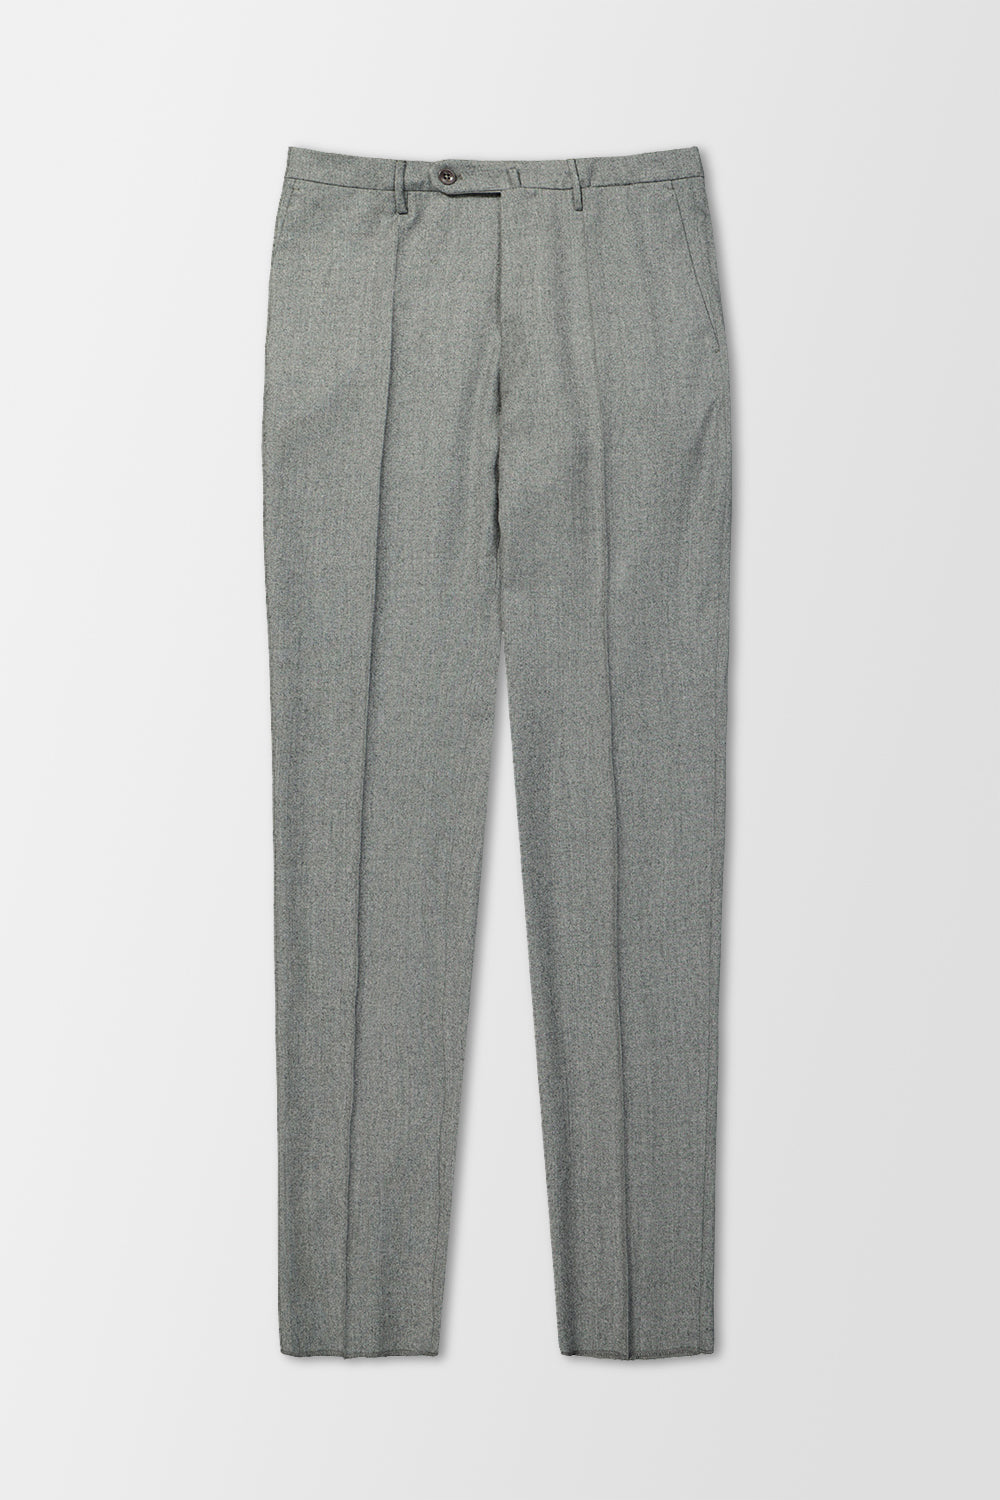 Incotex Grey Mito Trousers